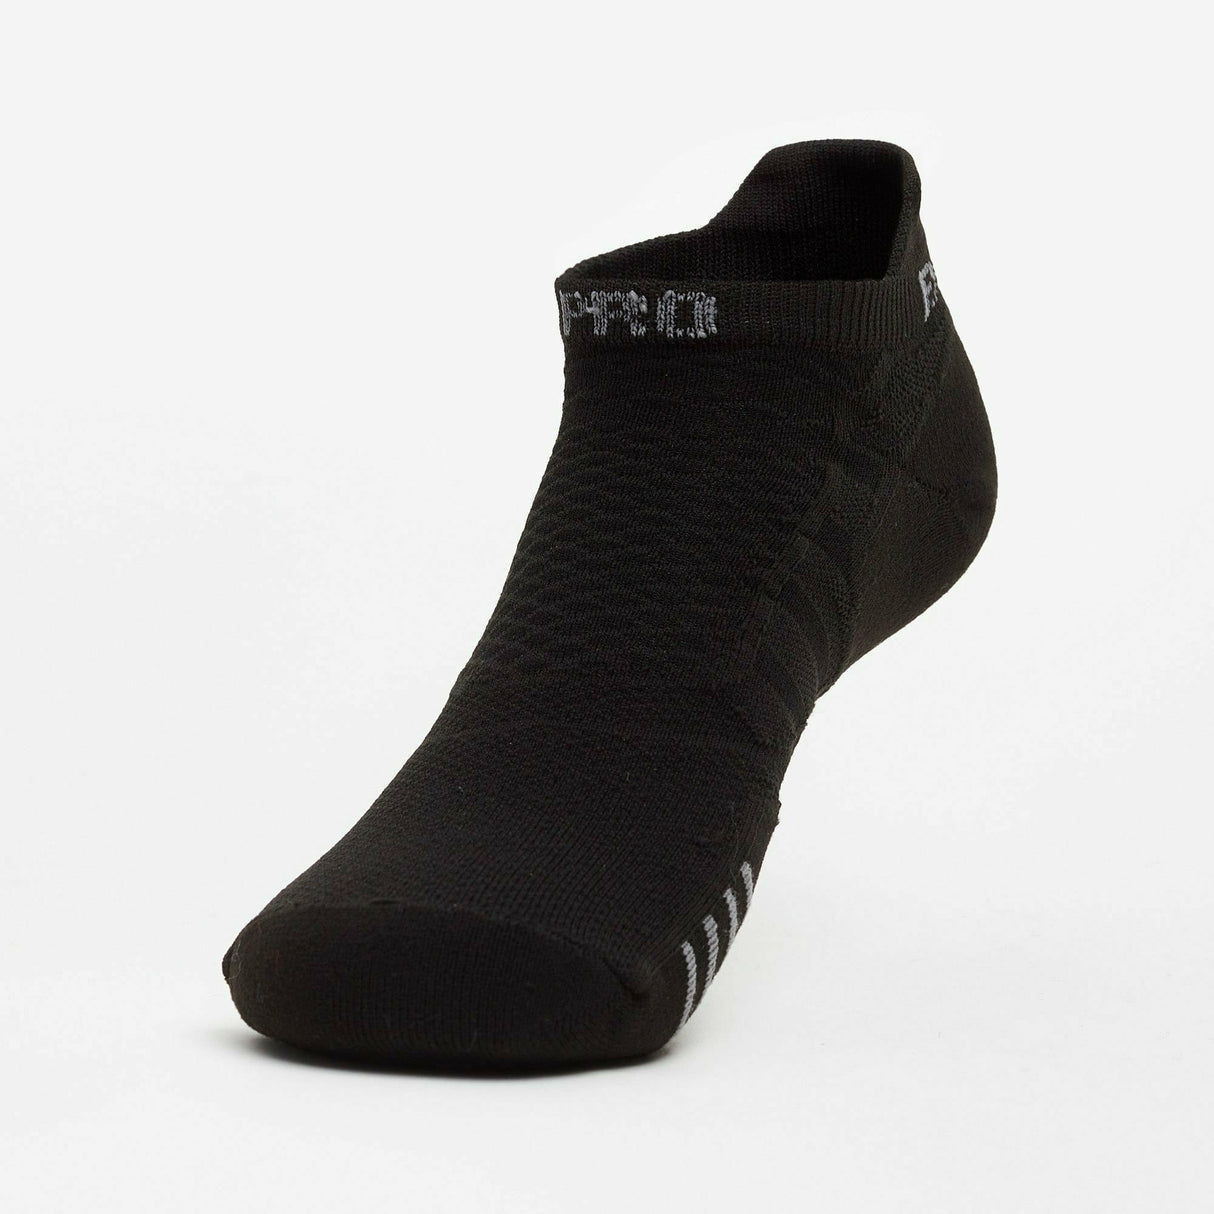 Thorlo Experia PROLITE Ultra-Light Cushion No Show Tab with Rocket Grip Socks  -  Small / Black on Black